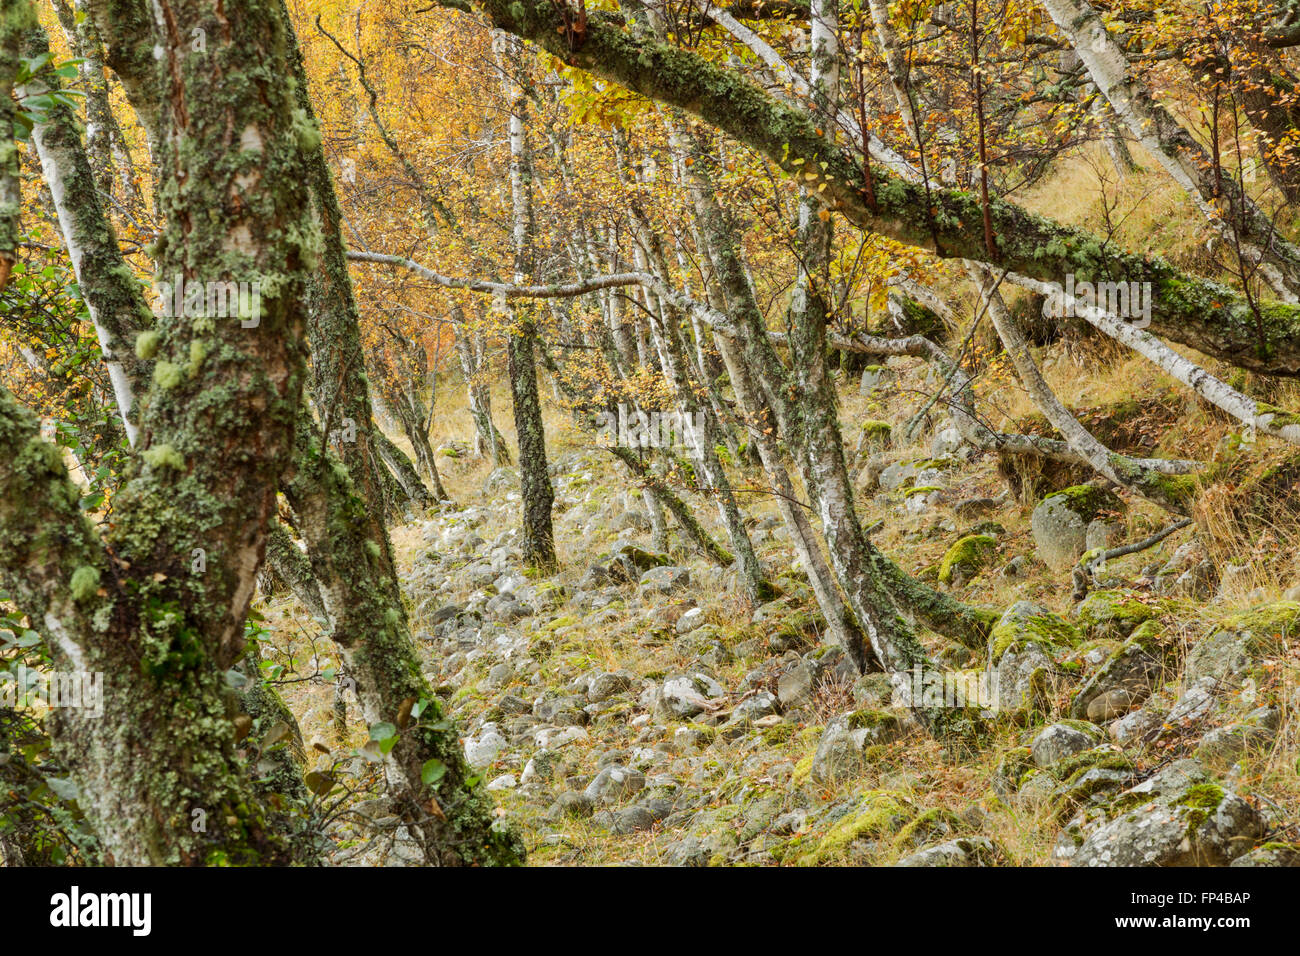 Silver birch woodland, Latin name Betula pendula, showing autumn colours Stock Photo